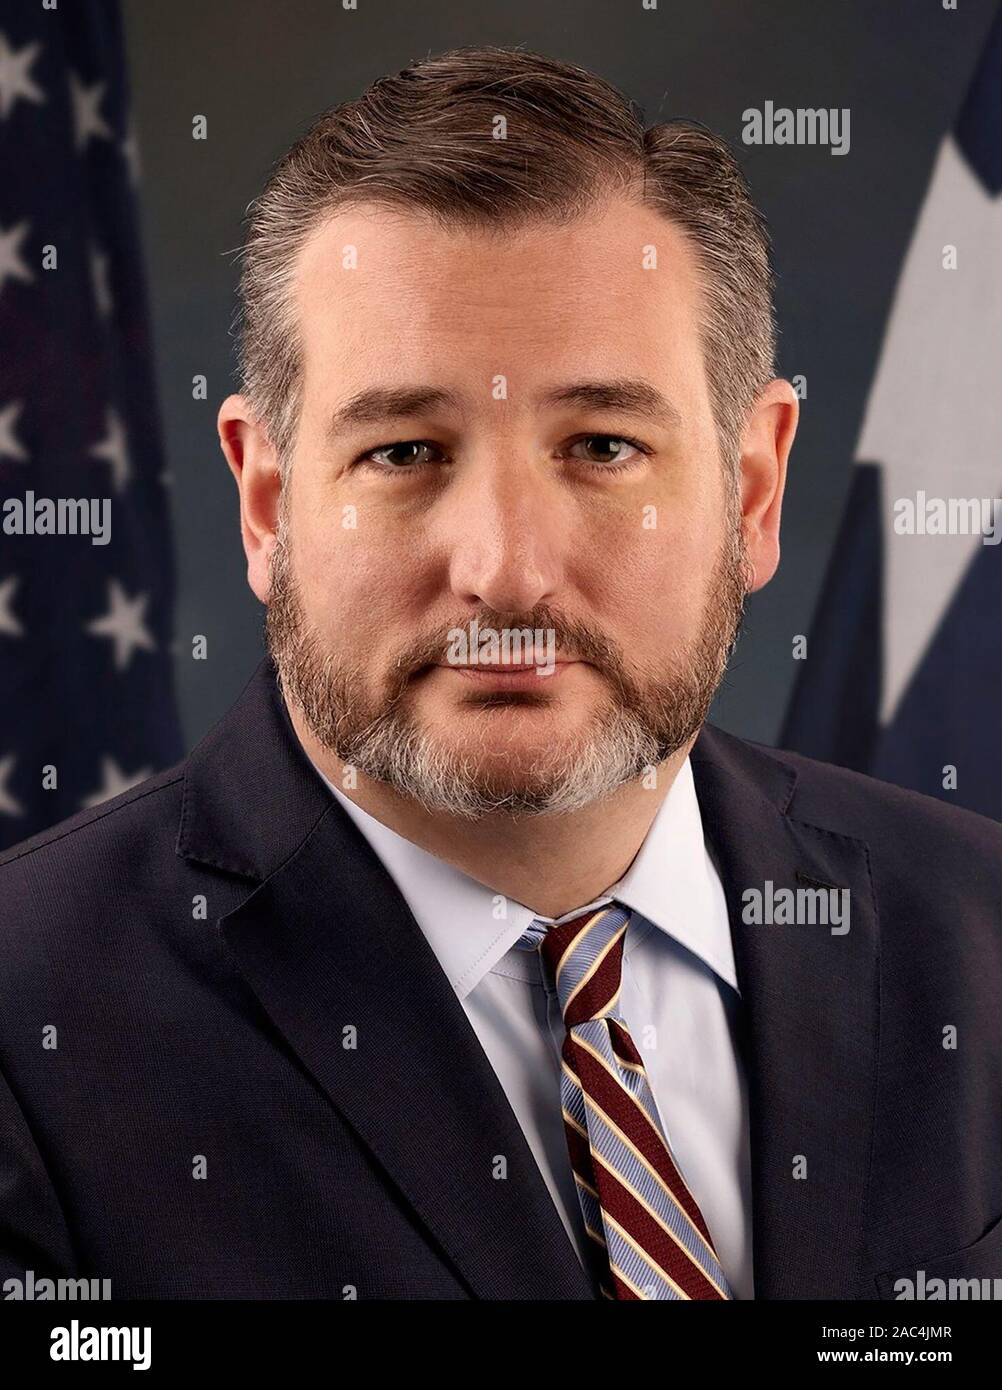 U.S. Senator Ted Cruz, Republican, Texas Stock Photo